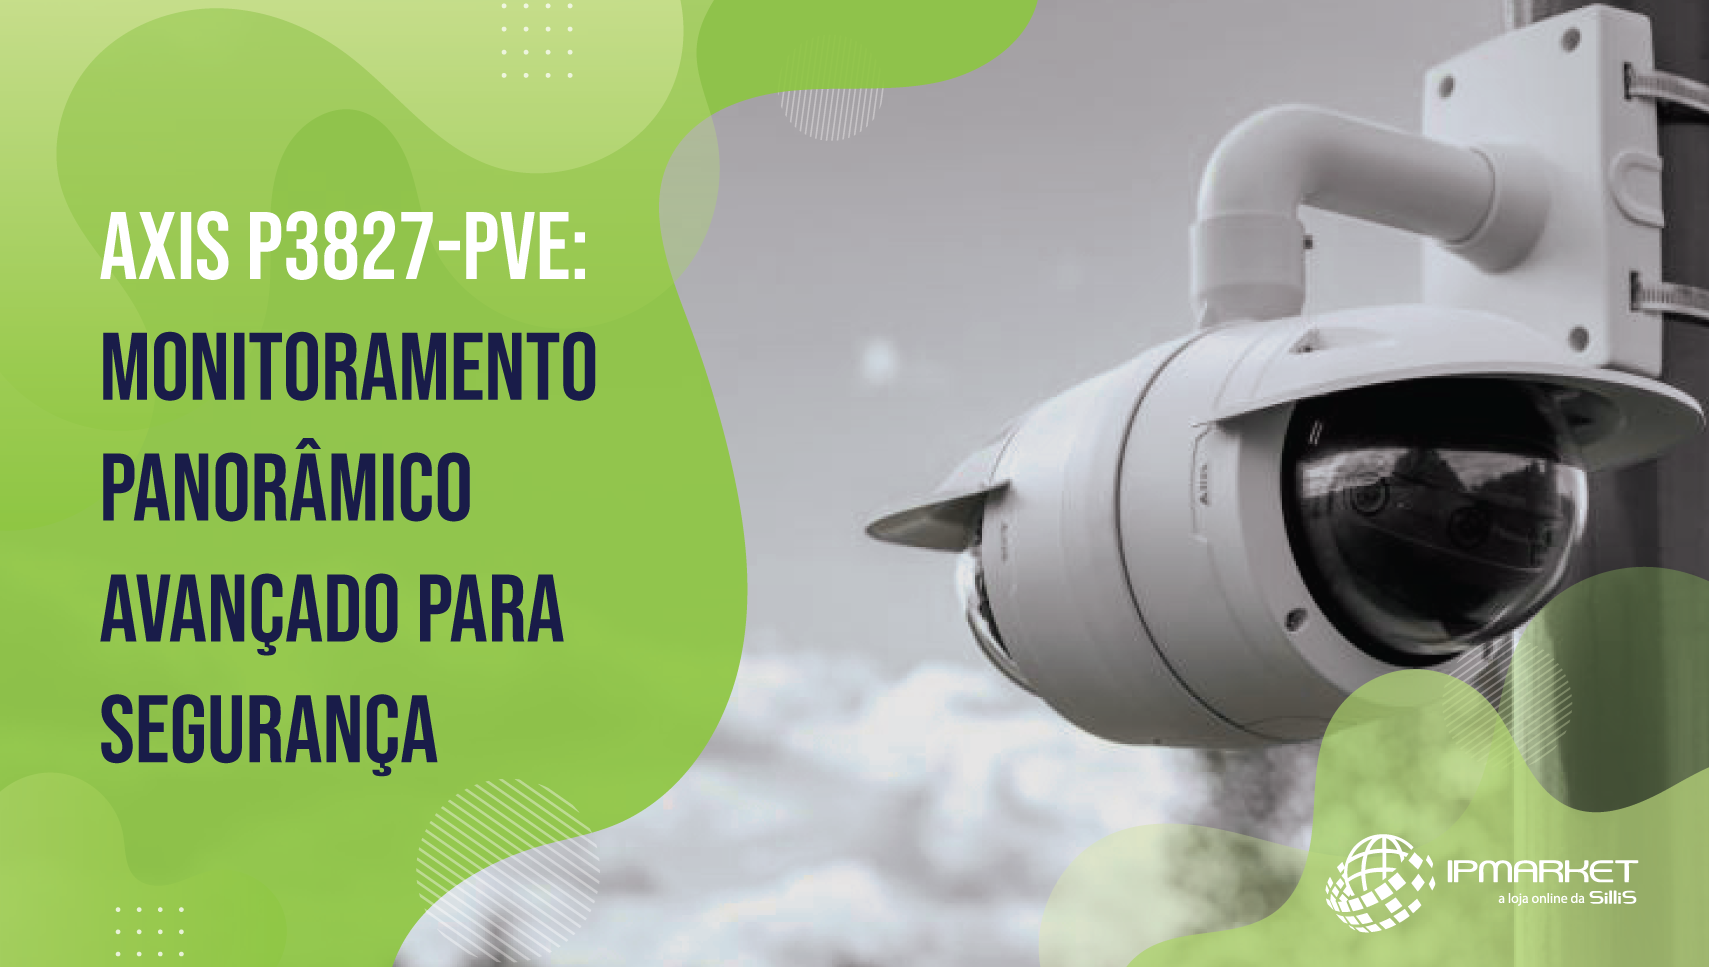 AXIS P3827-PVE Para Monitoramento Panorâmico Avançado